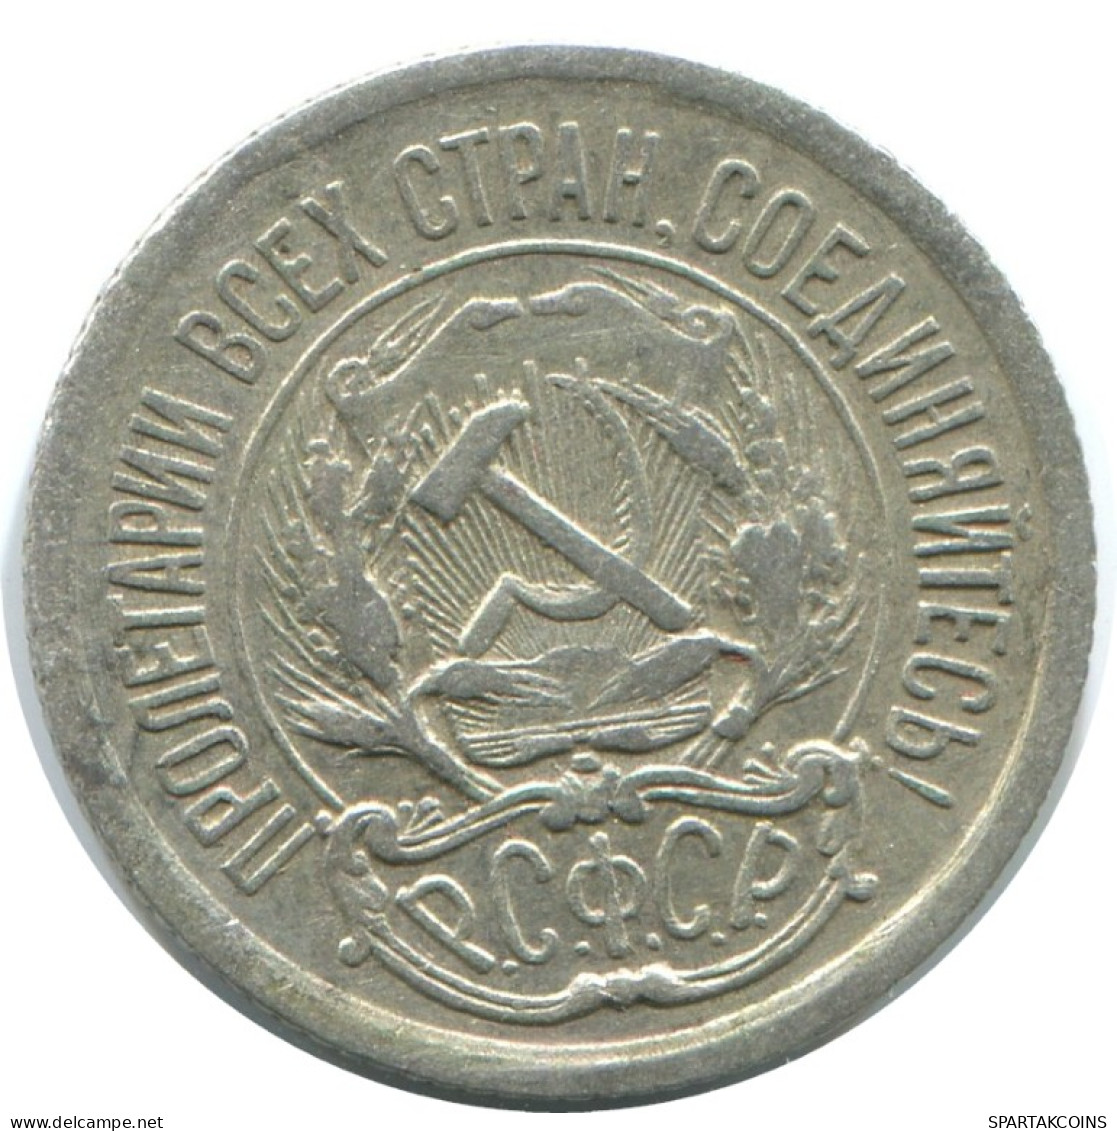 10 KOPEKS 1923 RUSIA RUSSIA RSFSR PLATA Moneda HIGH GRADE #AE979.4.E.A - Russia